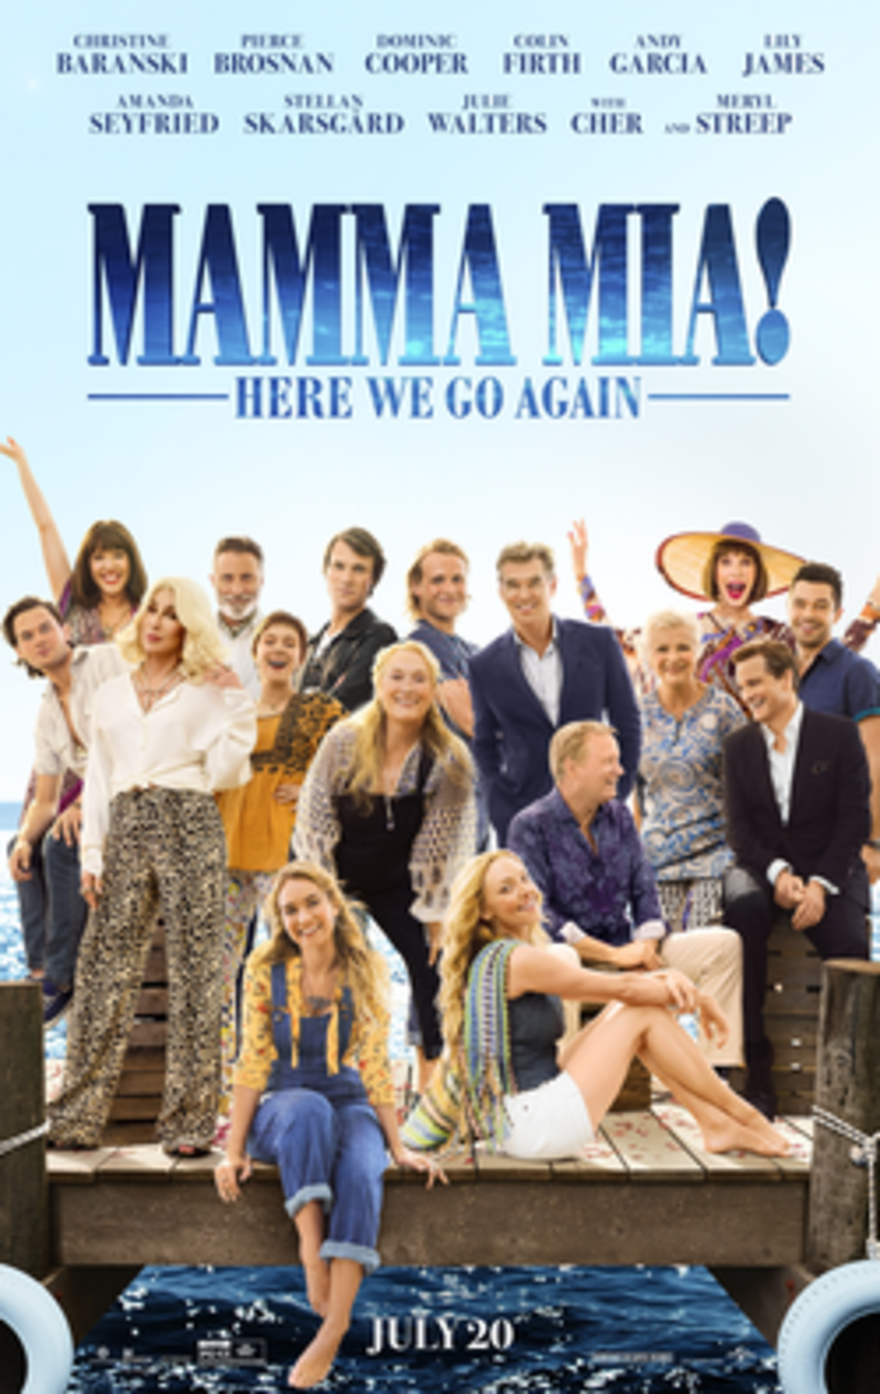 Cast of "Mamma Mia! Here We Go Again"